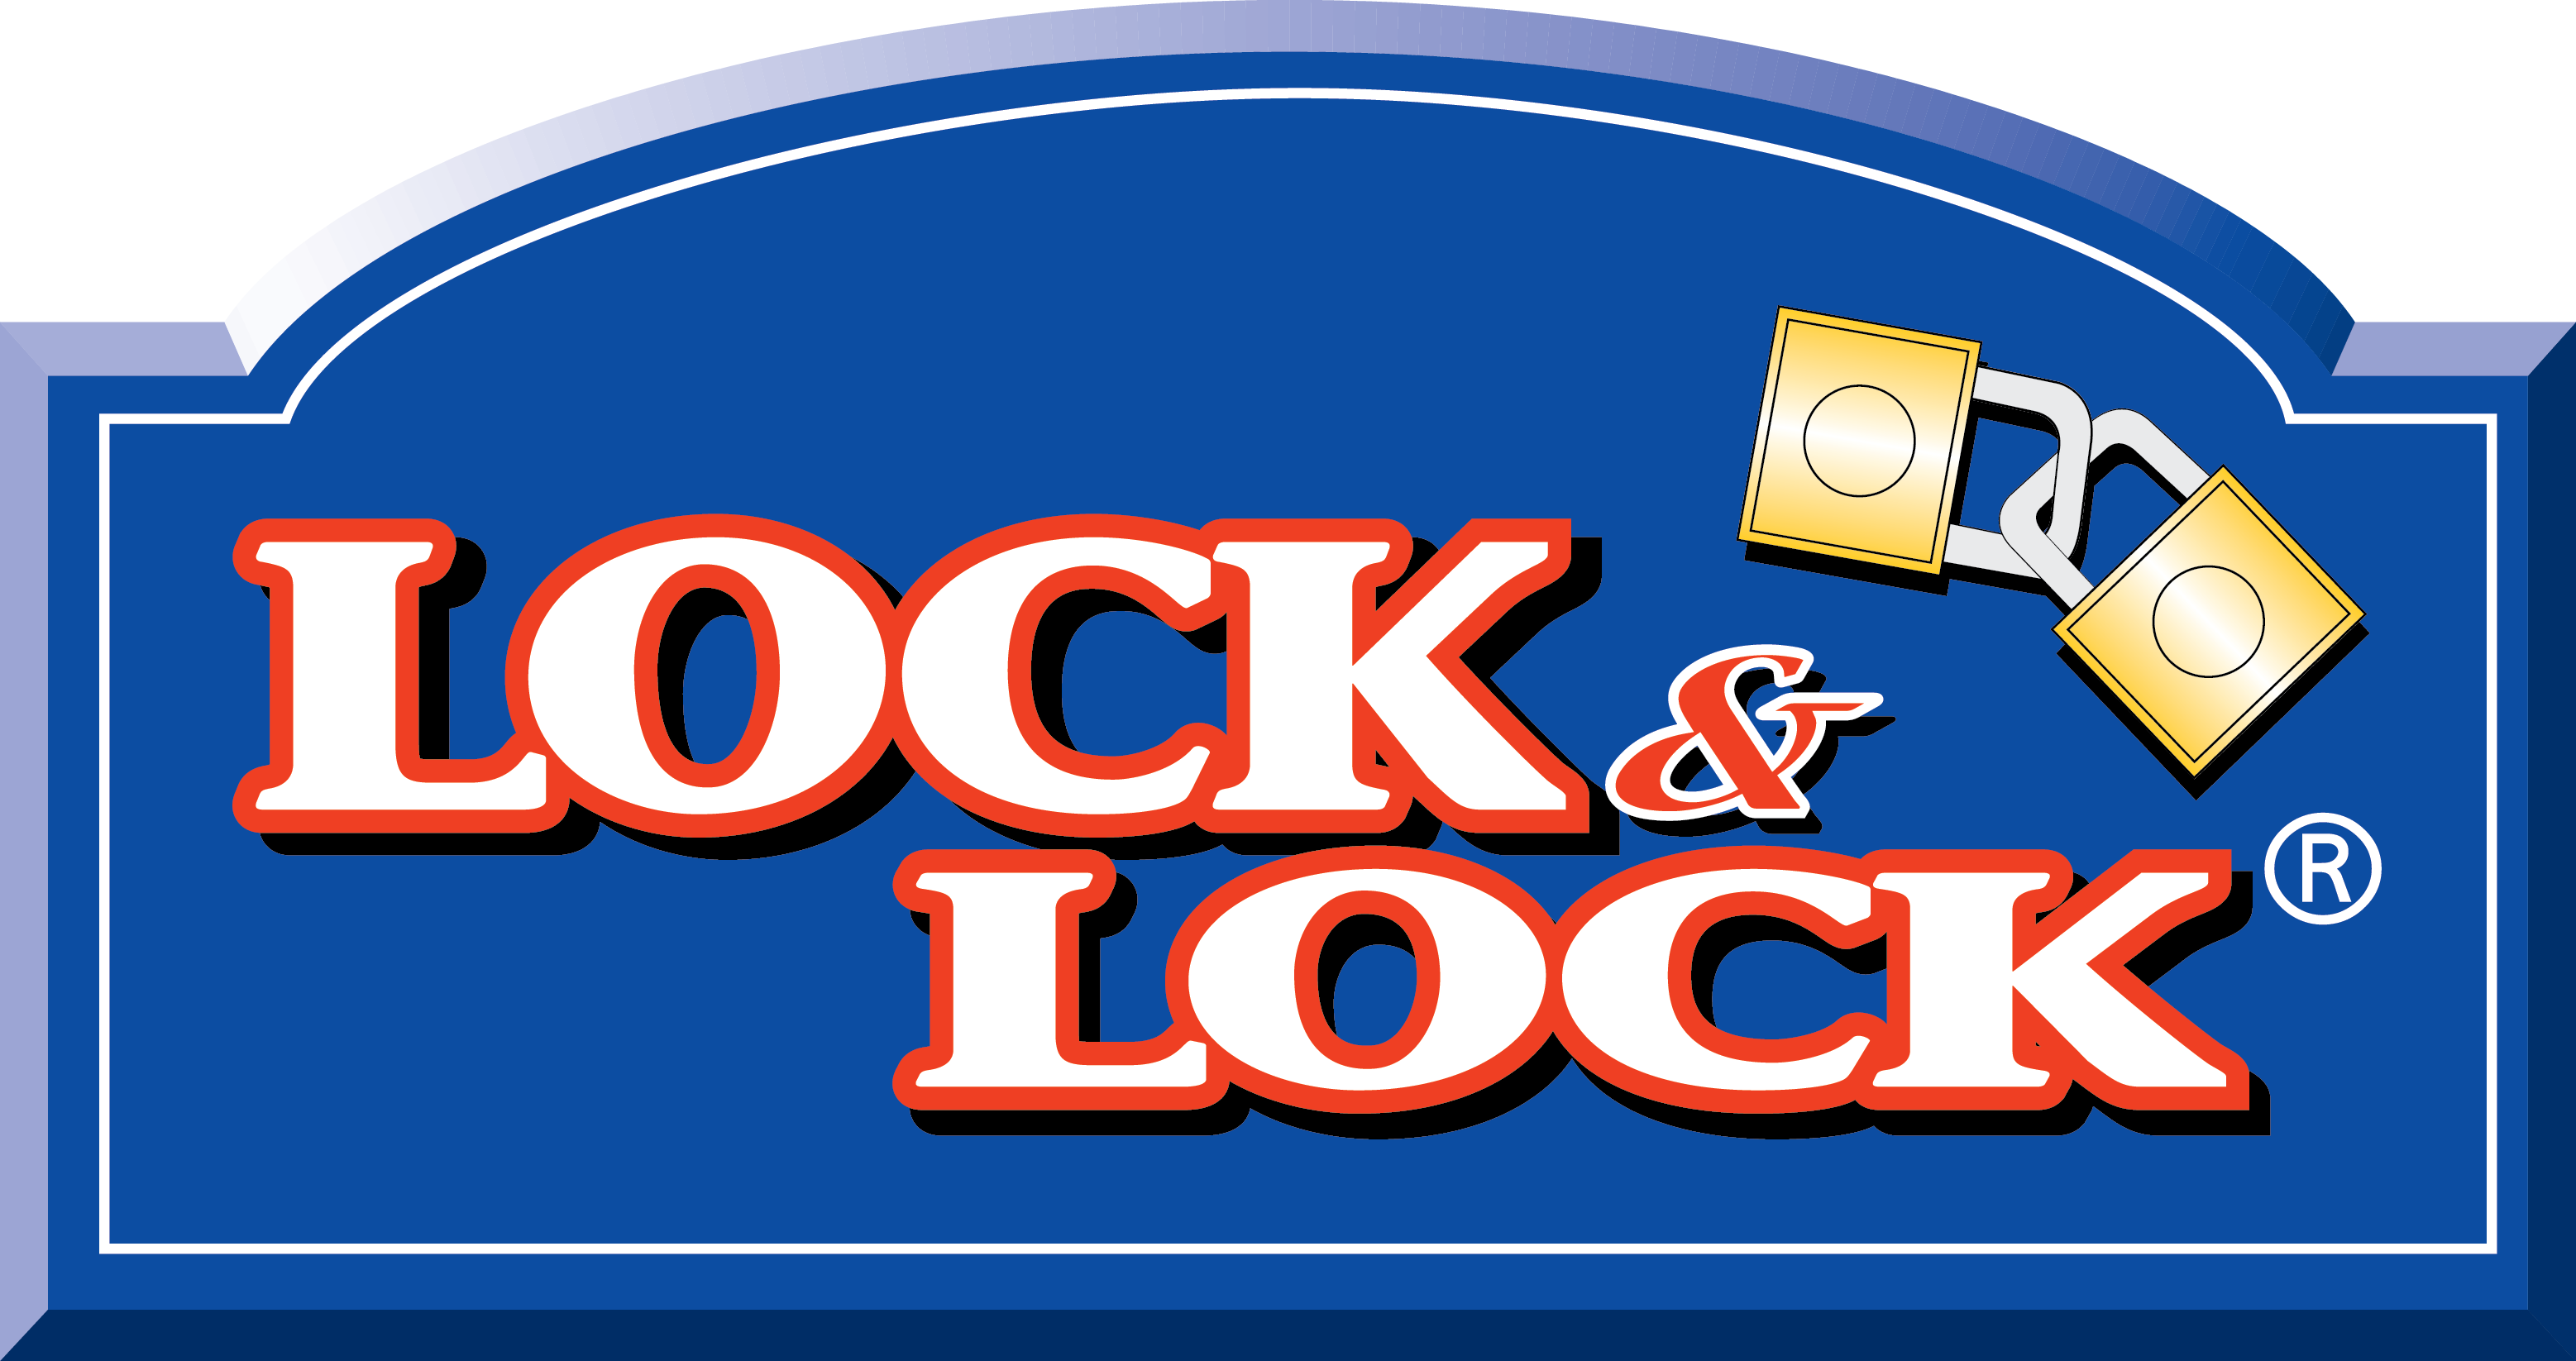 Lock logo. Pro-Lock логотип. Trade Lock эмблема. Надпись Locked. Lock на русском языке